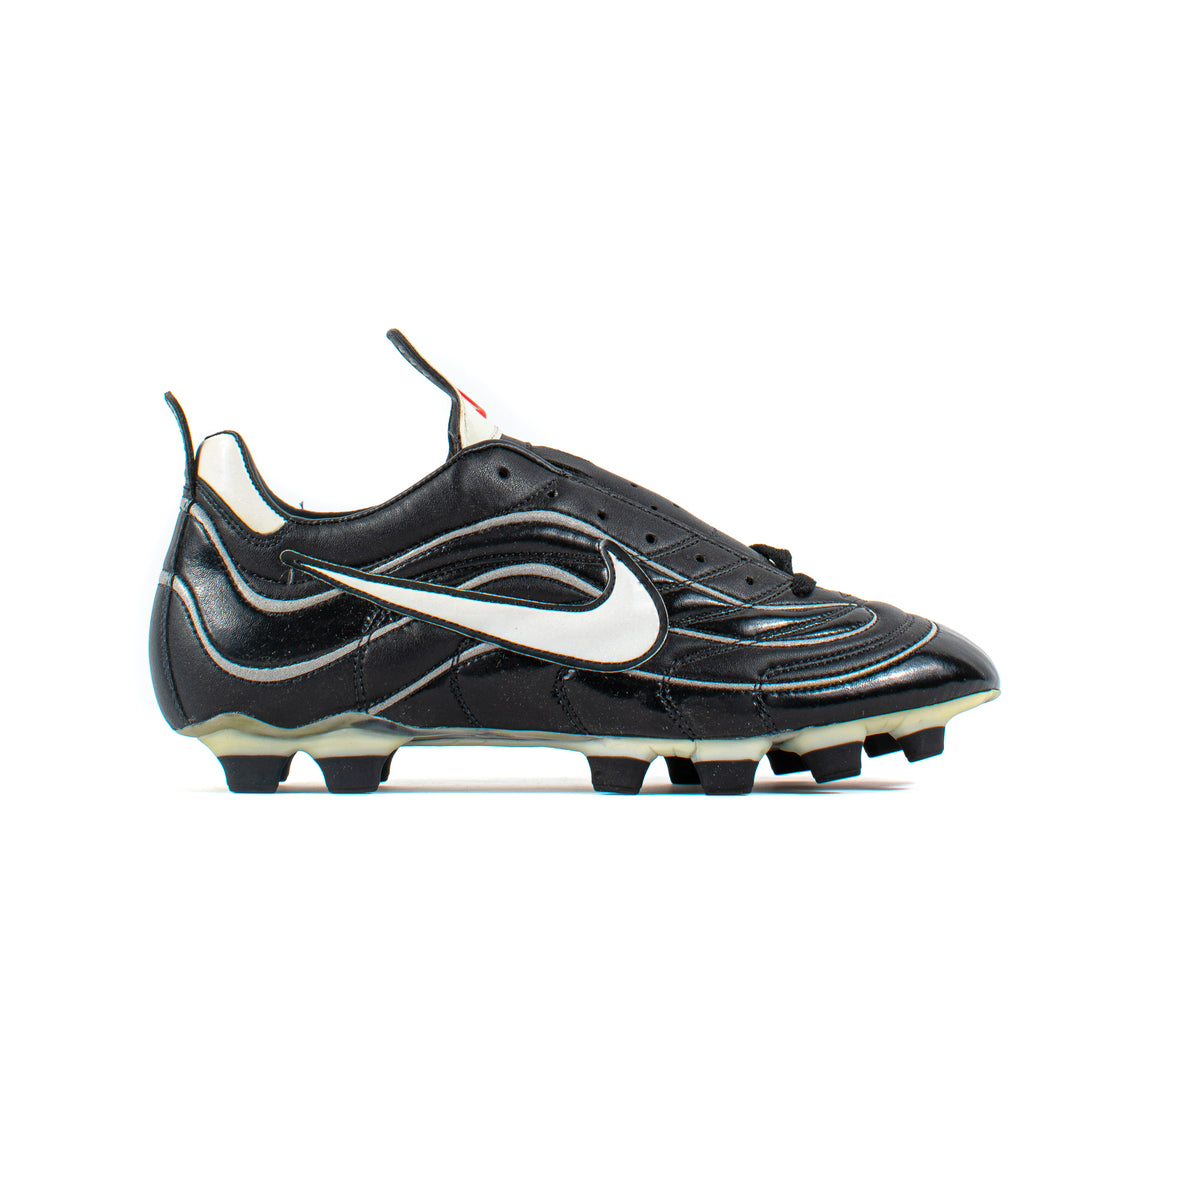 corriente director Vulgaridad Nike Mercurial 1998 R9 Black White FG – Classic Soccer Cleats